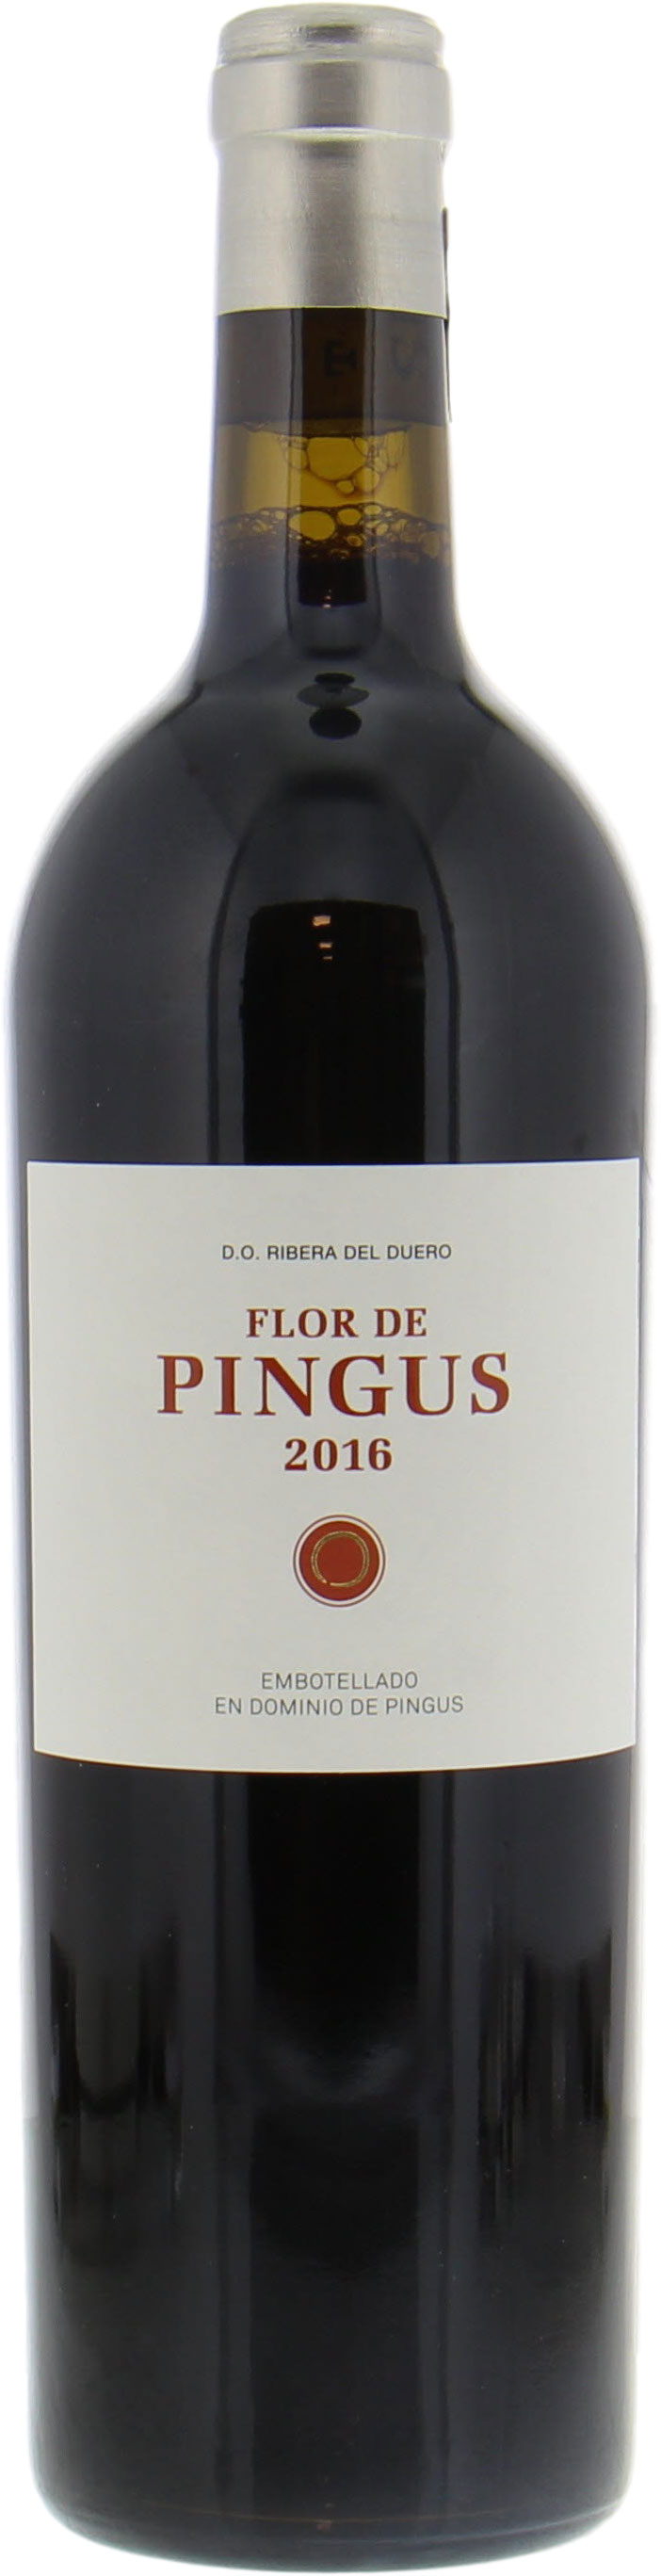 Pingus - Flor de Pingus 2016